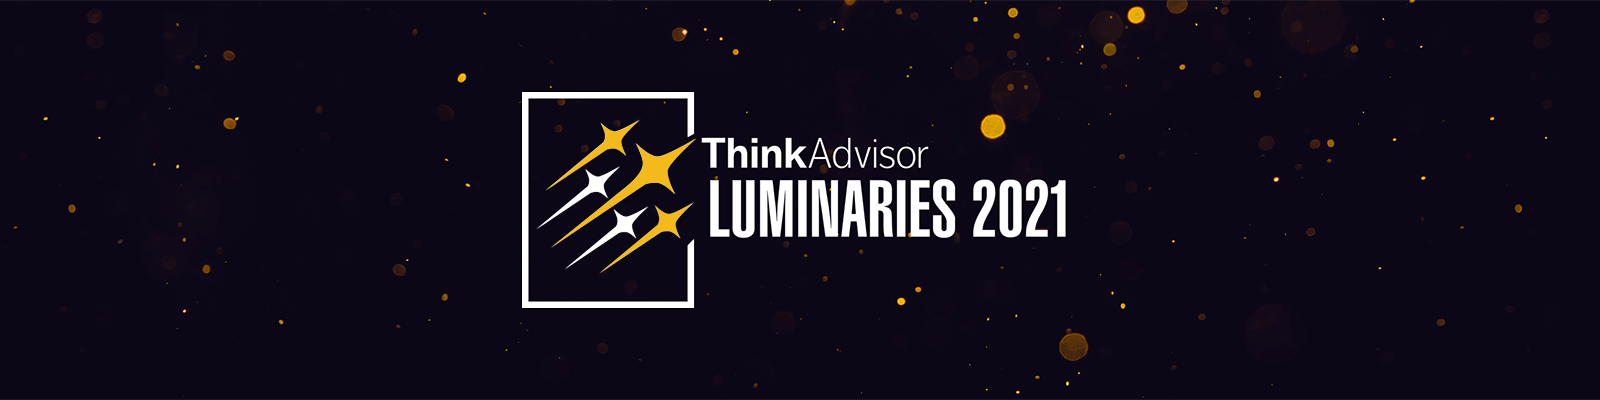 NAIFA members honored as Luminaries by ThinkAdvisor